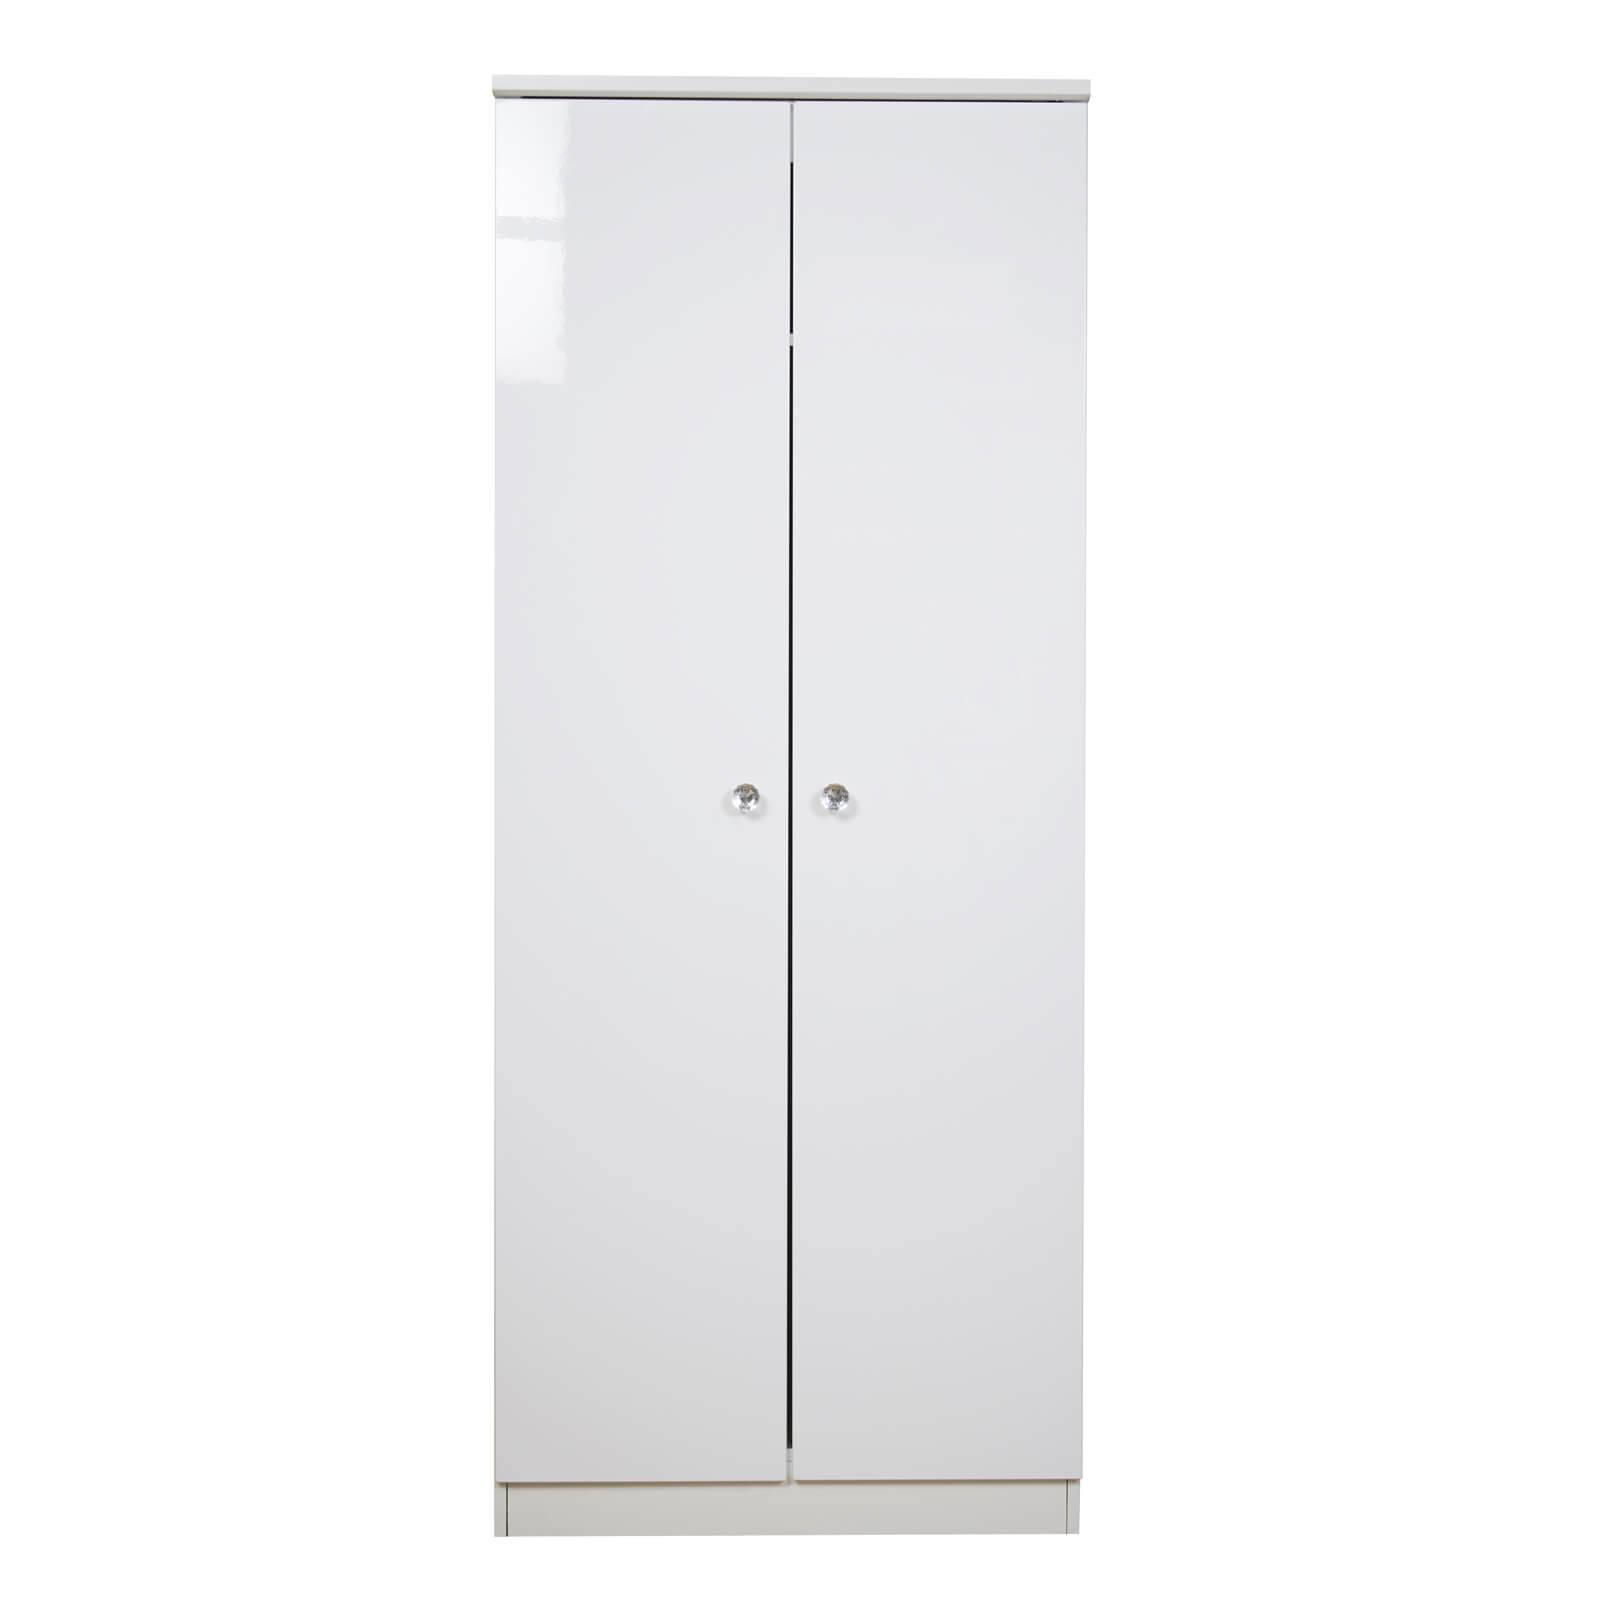 Lumo 2 Door Wardrobe with LED Lighting - White